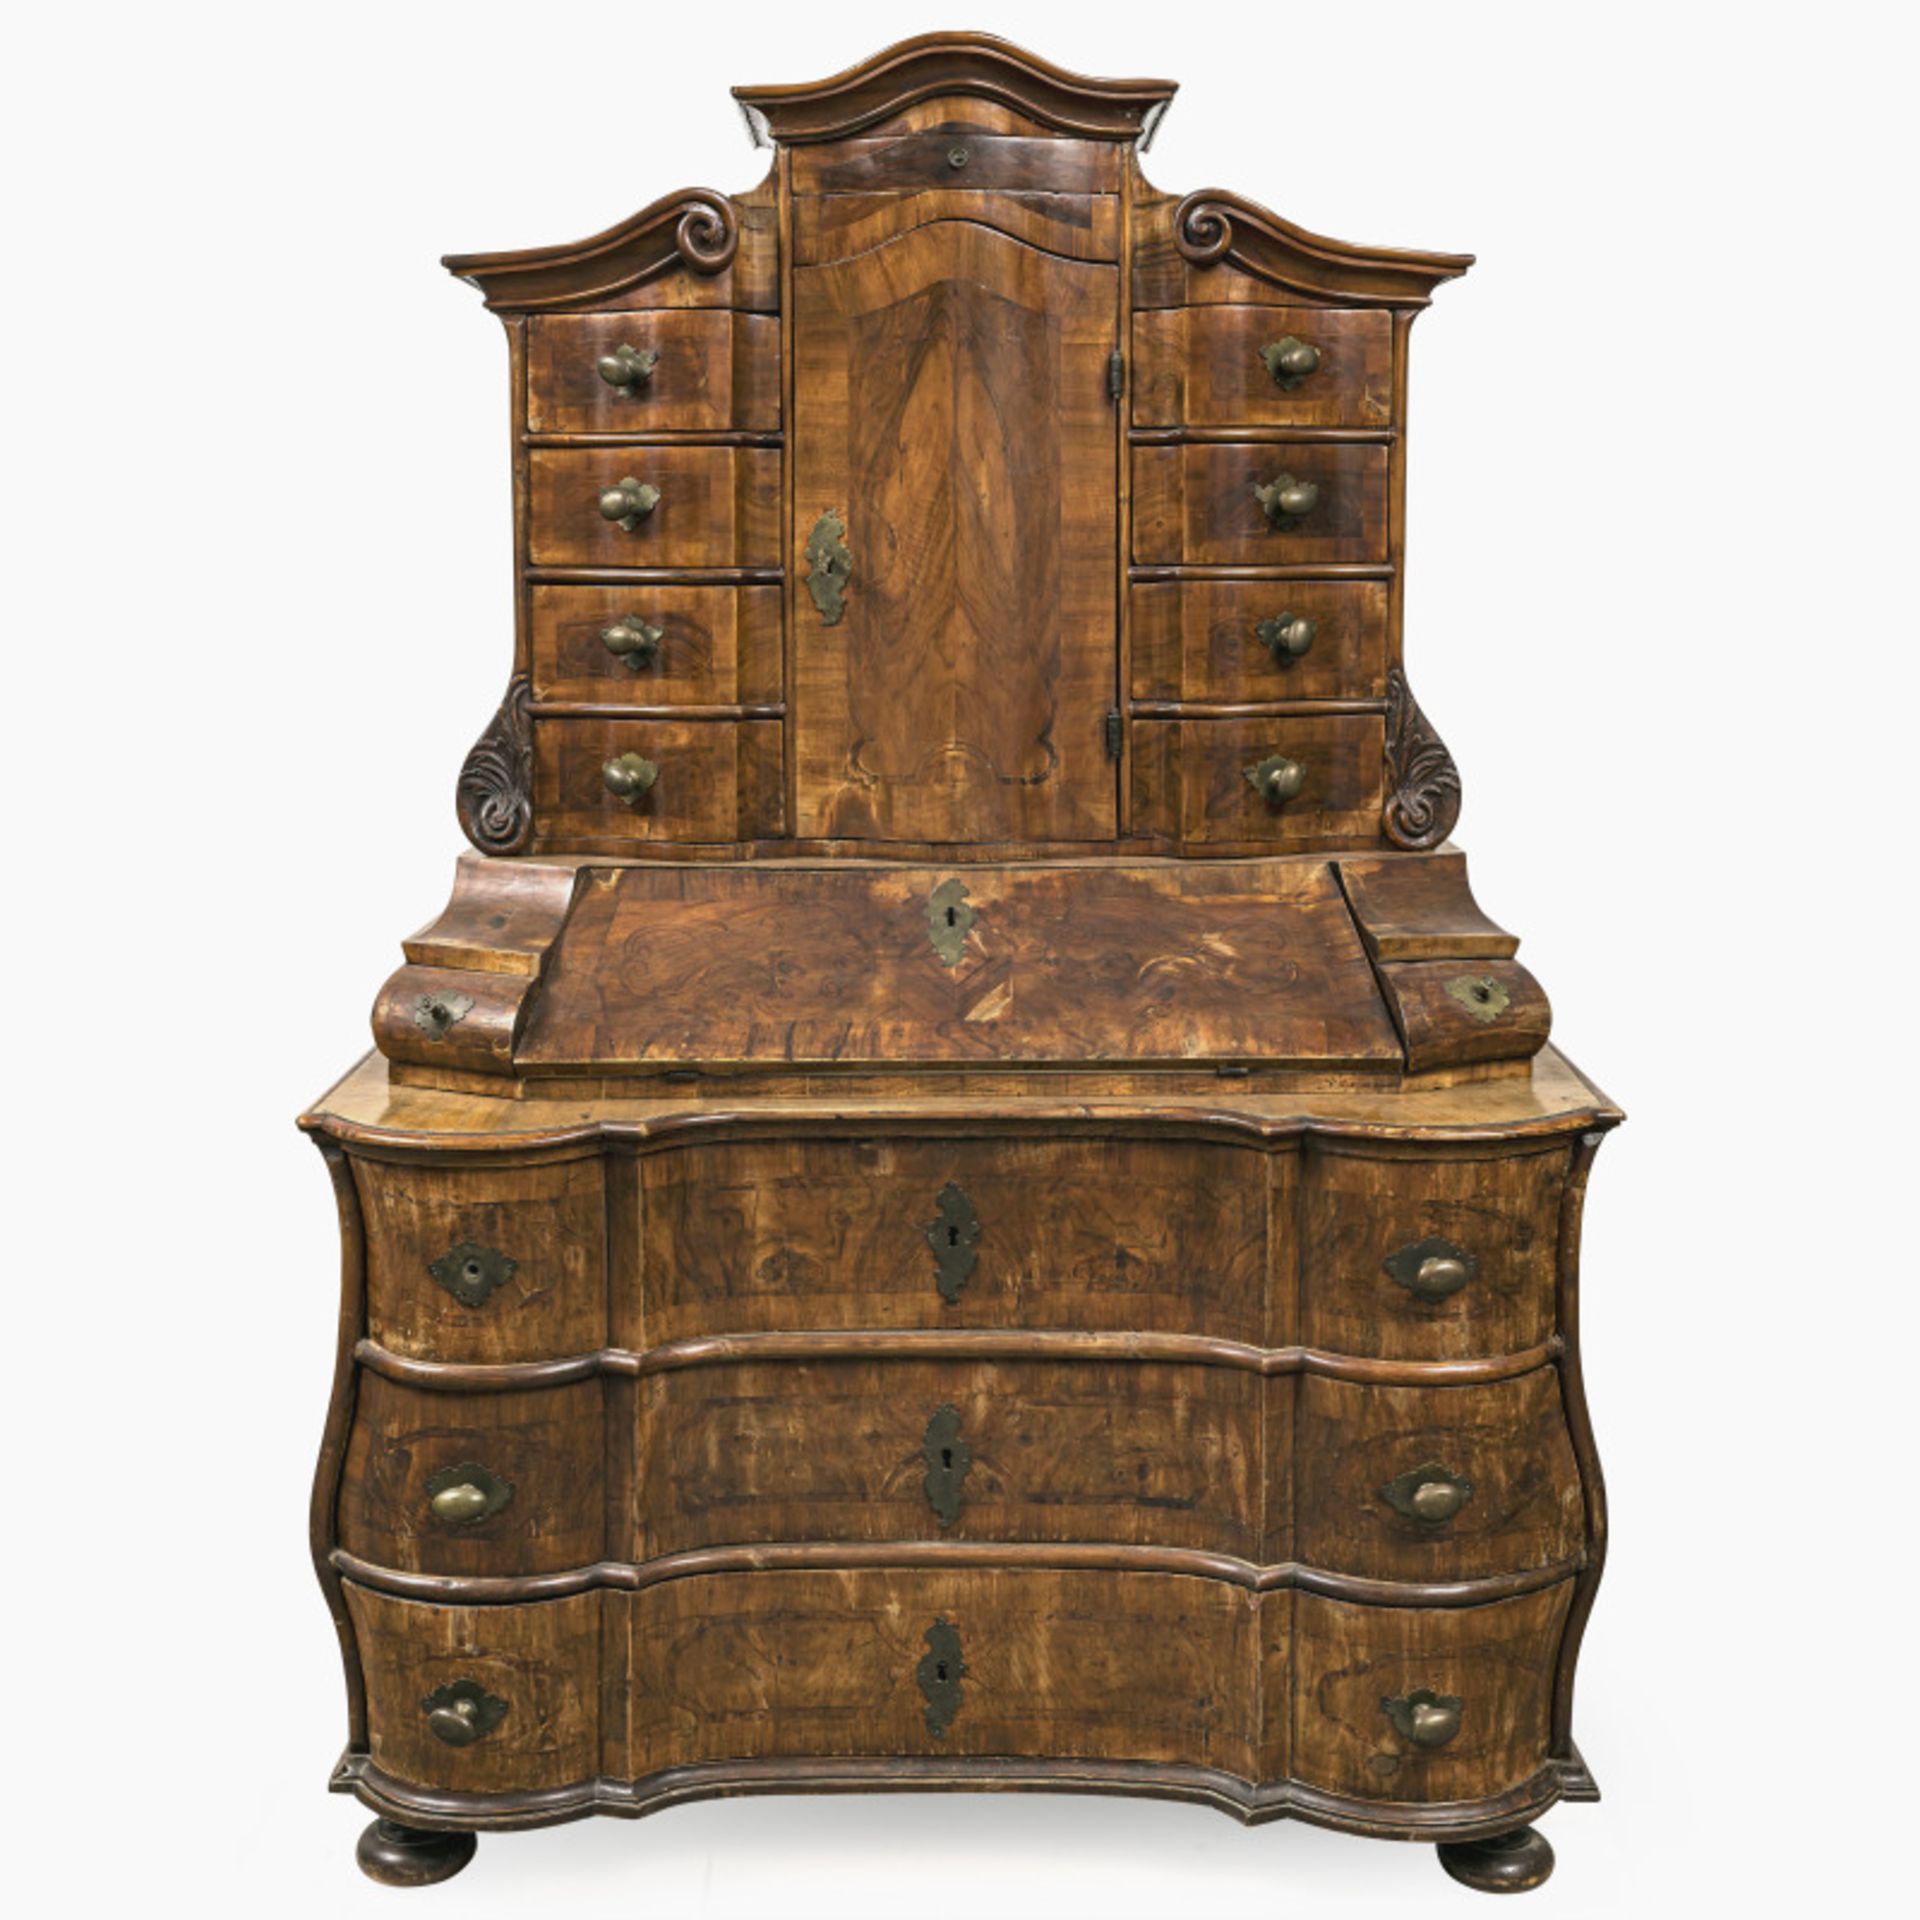 A bureau cabinet - Baroque style